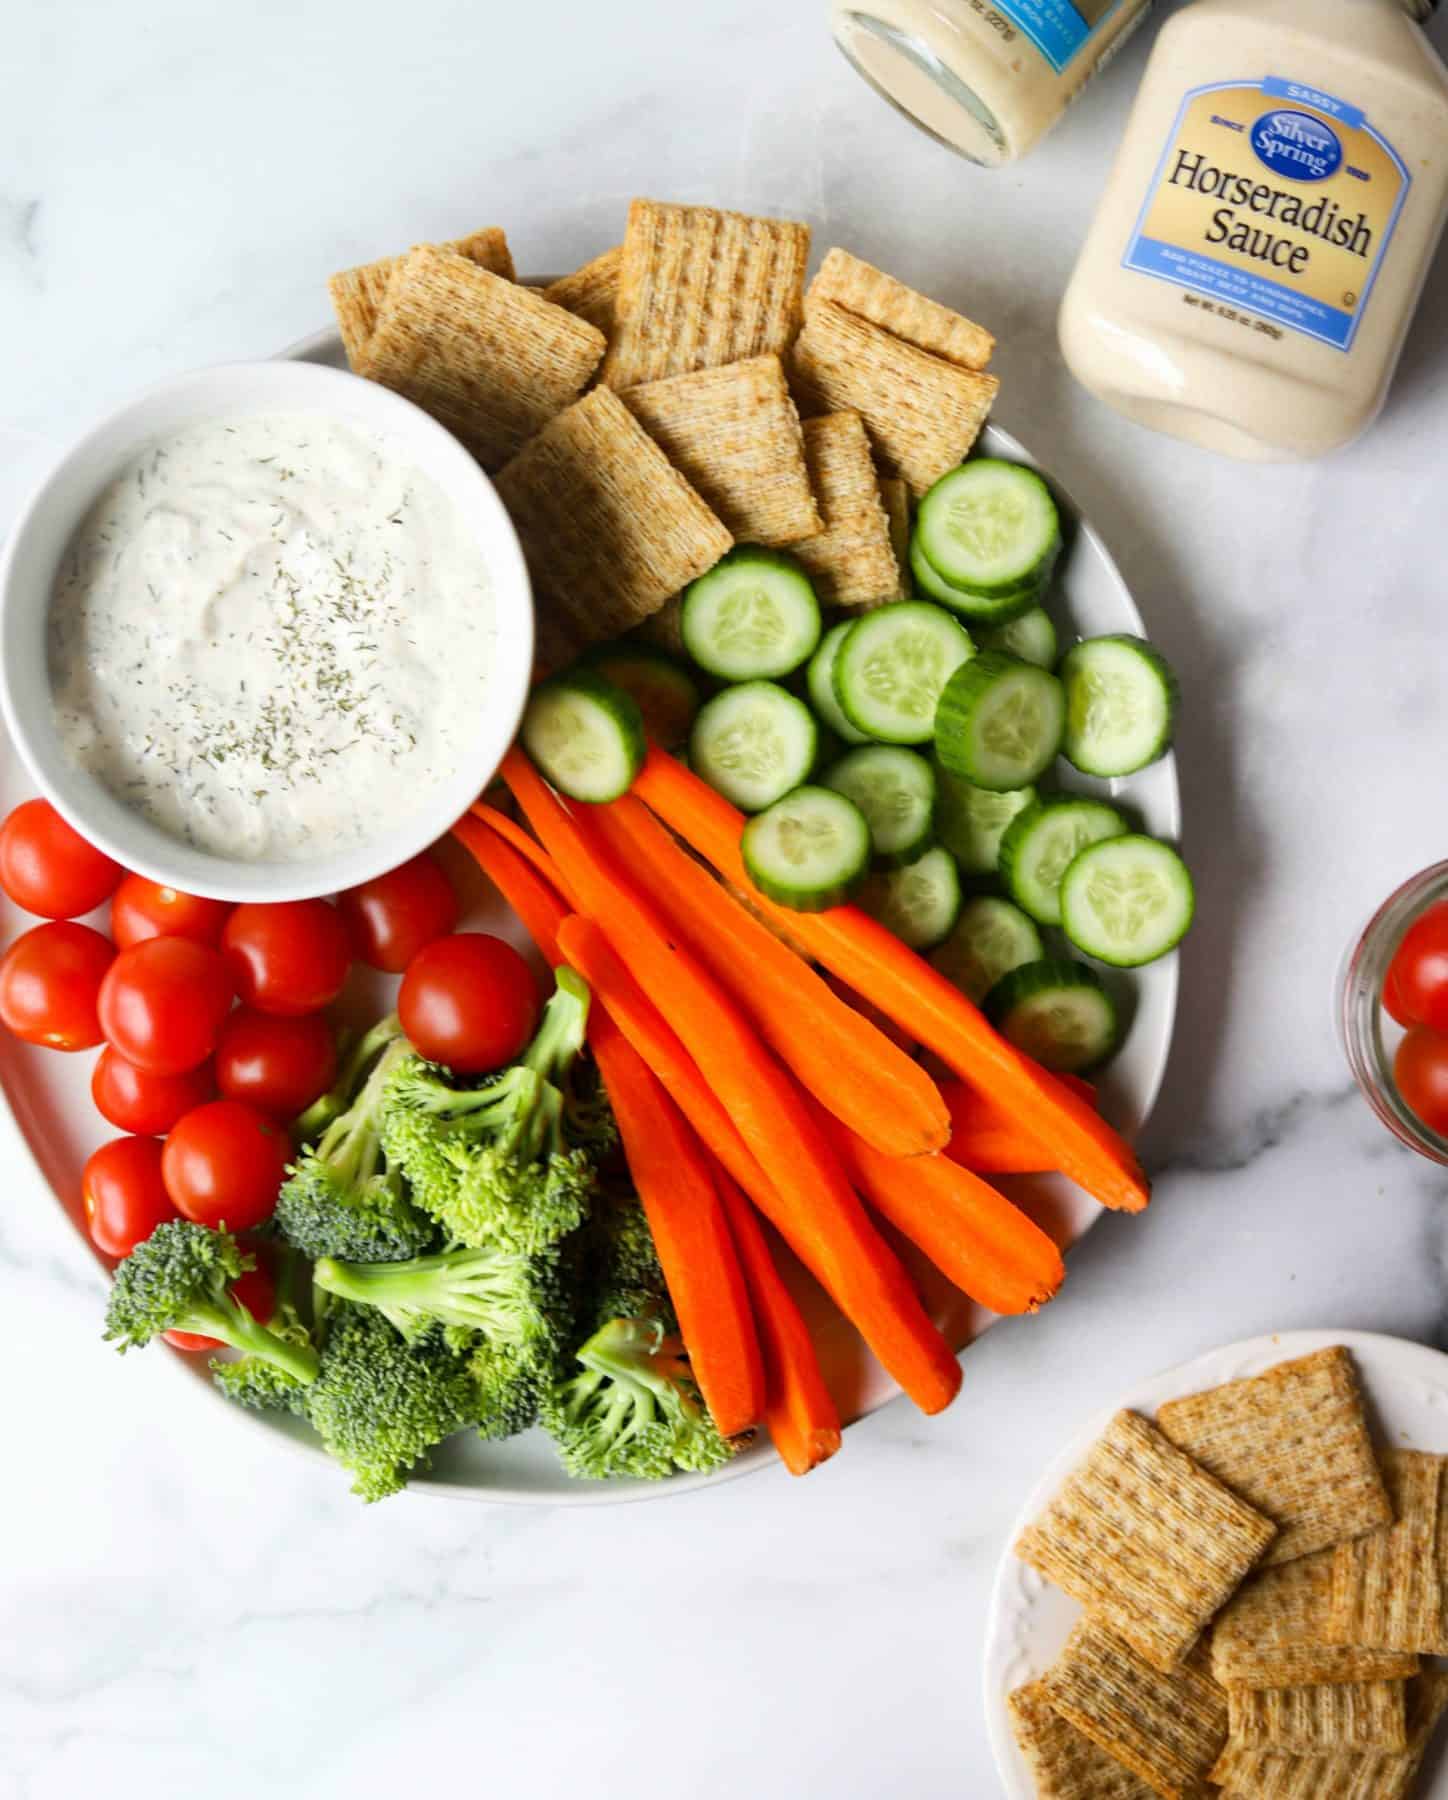 Plate full of veggies and crackers with horseradish dip